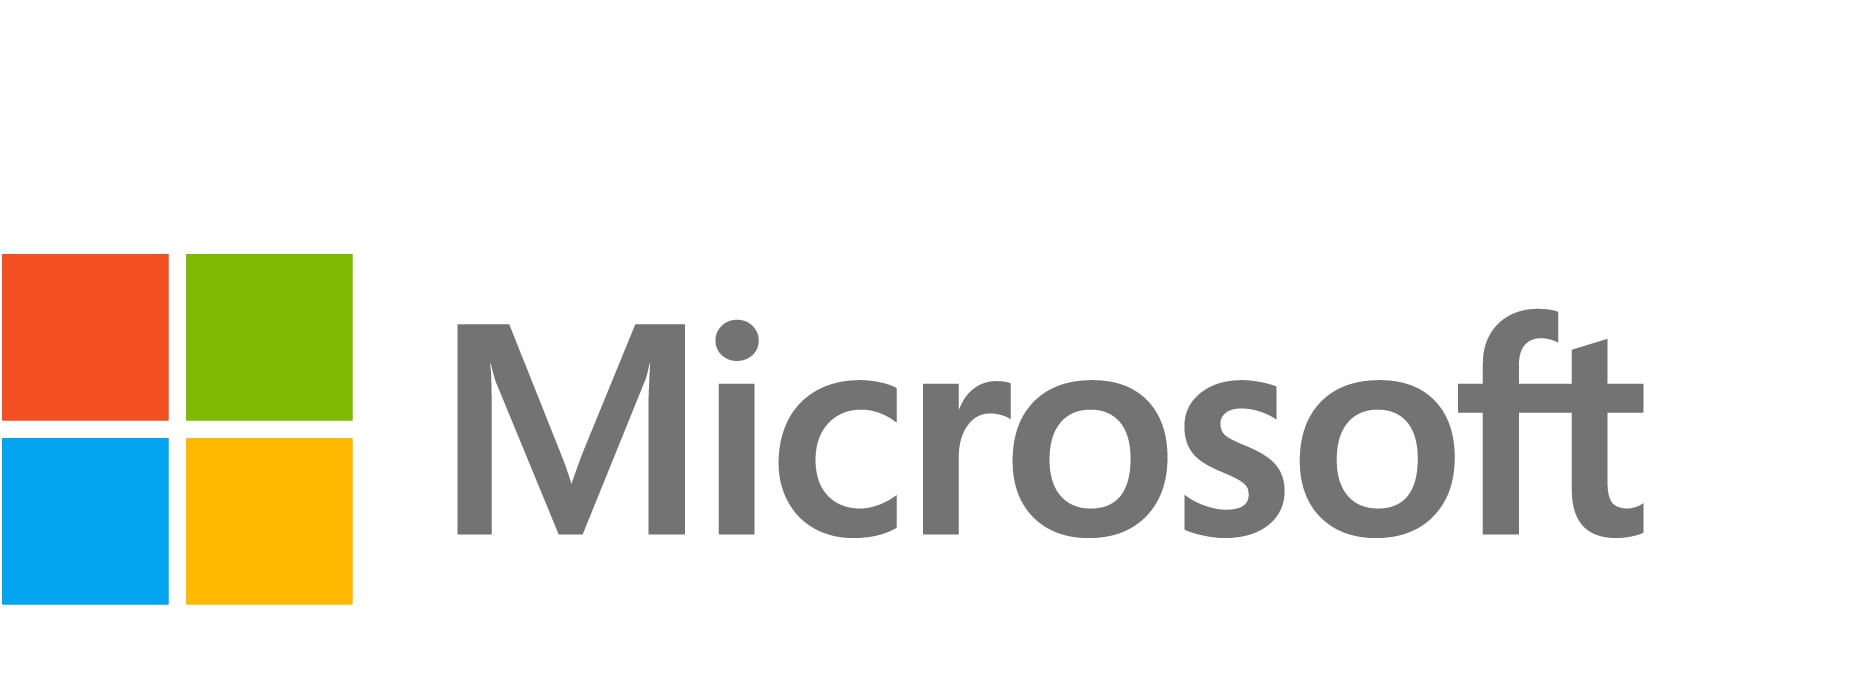 Microsoft Dynamics 365 Plan 1, Enterprise edition - subscription license (1 month) - 1 user